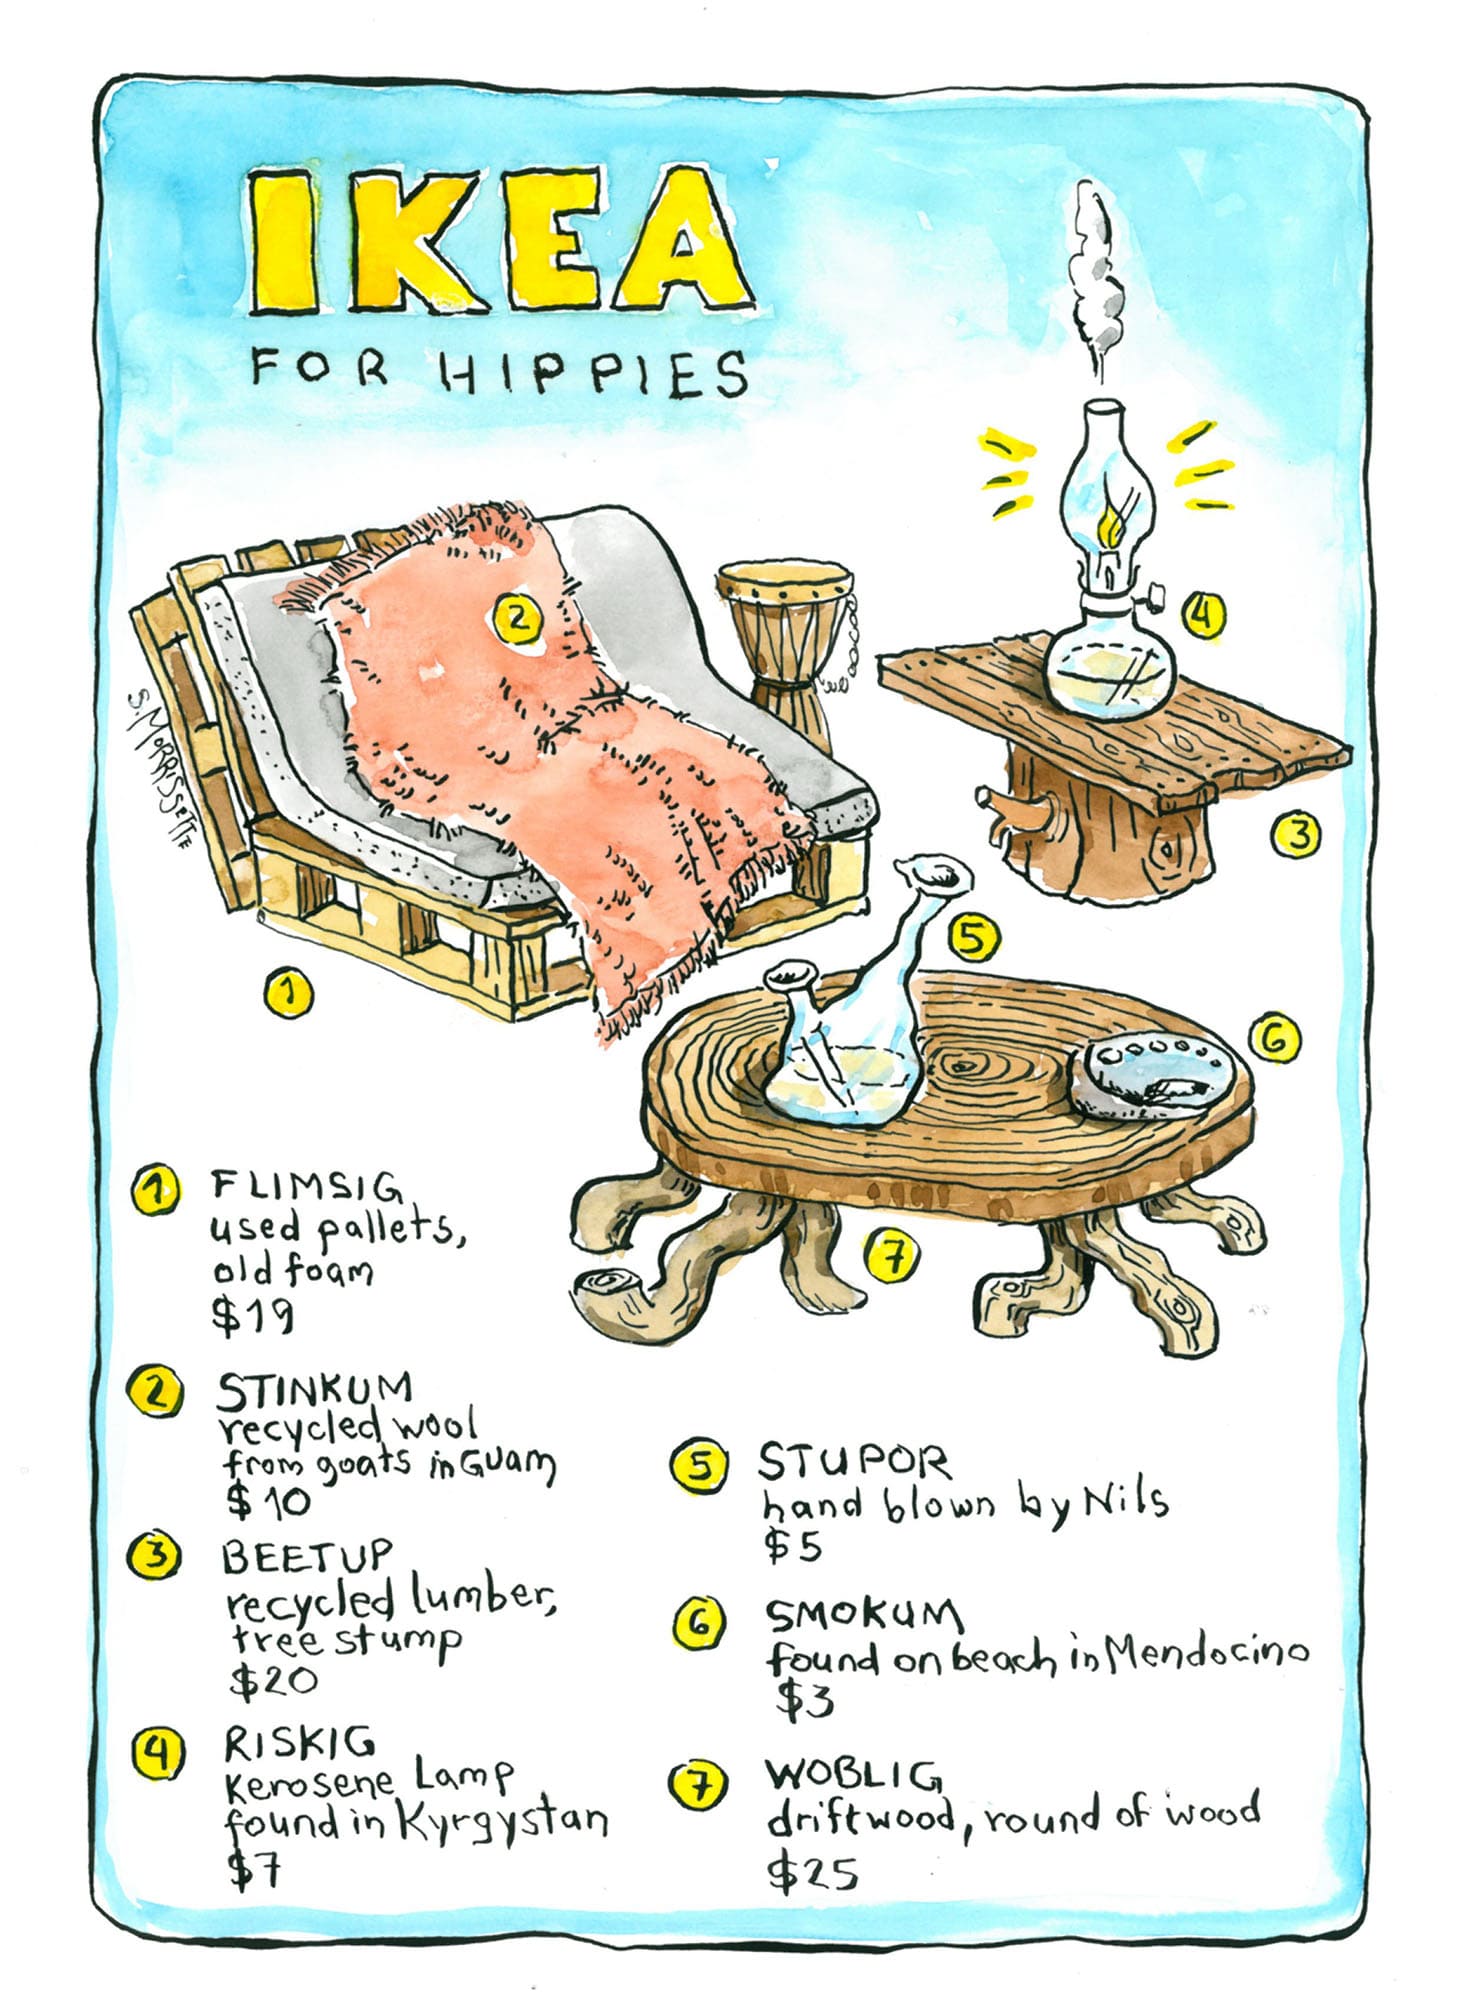 Ikea catalog for hippies | © Sarah Morrissette